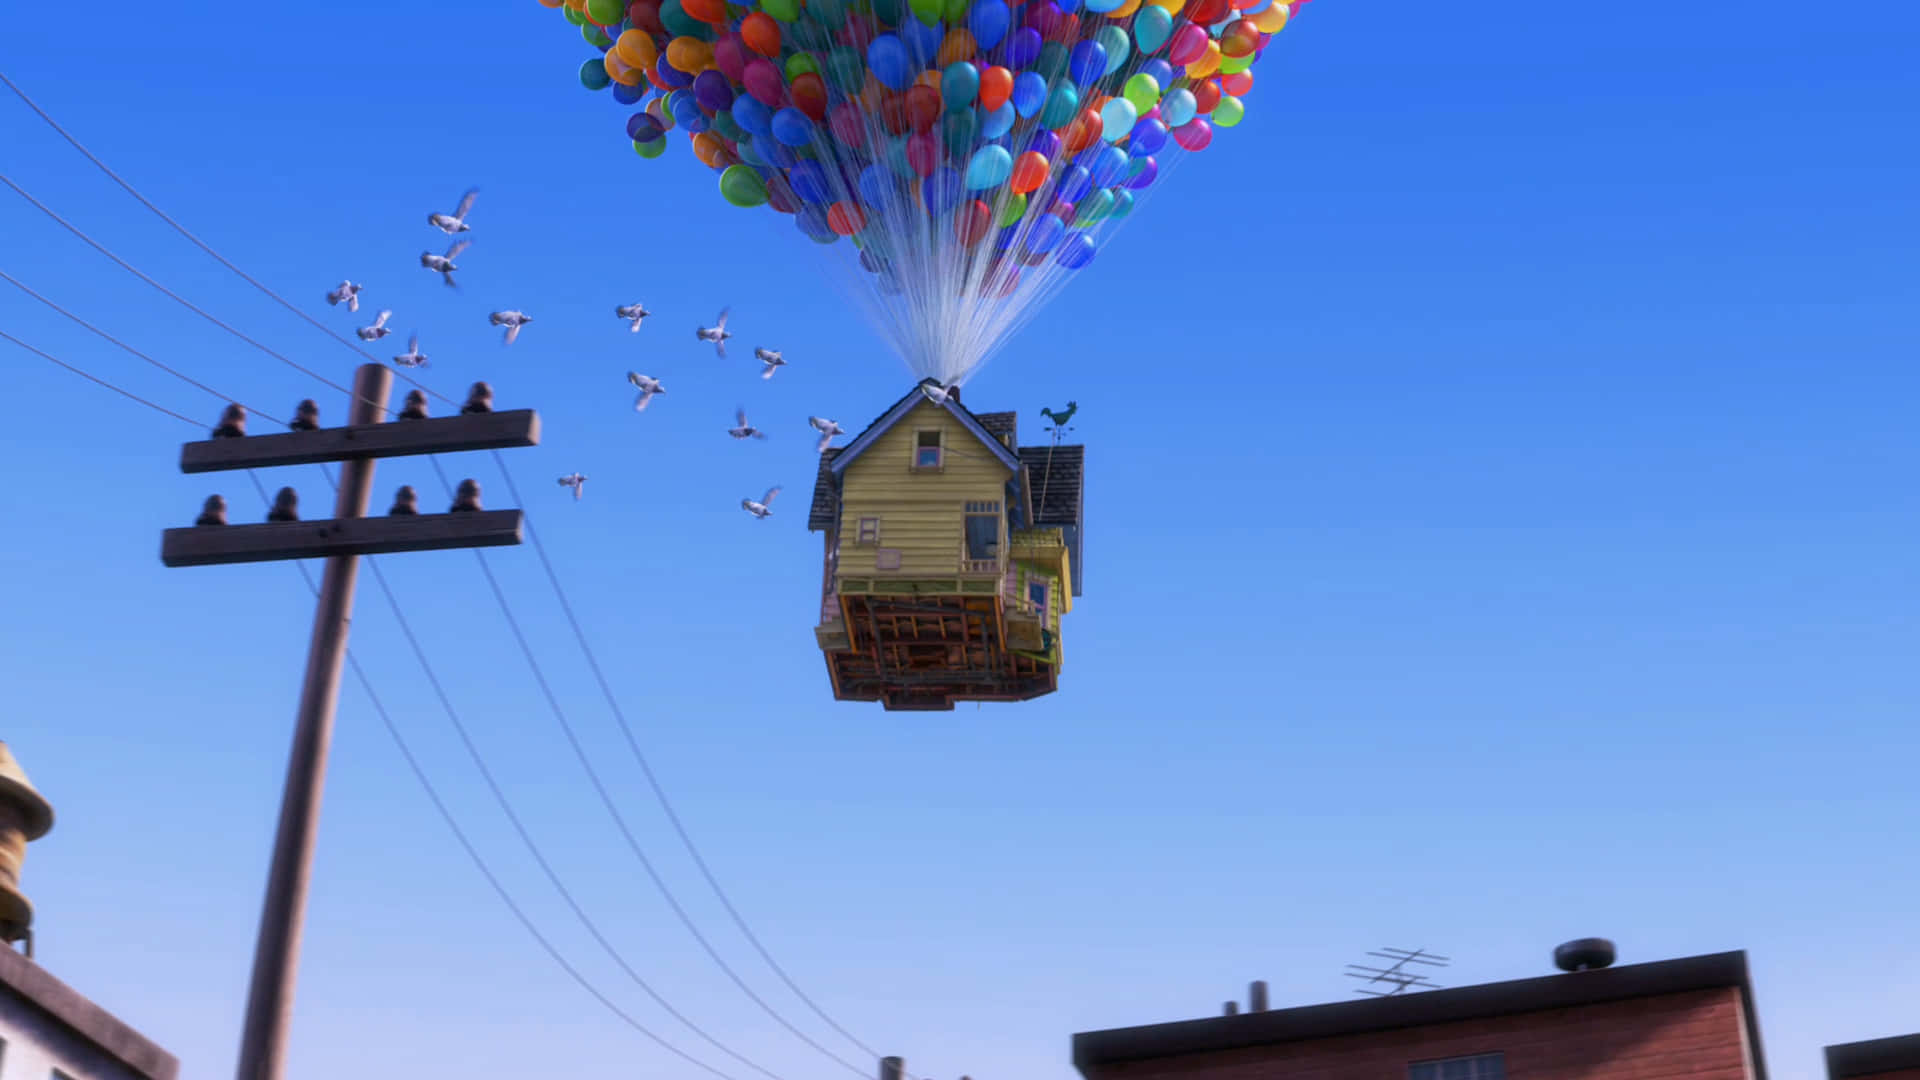 Opet Hus Med Balloner, Der Flyver Over Det